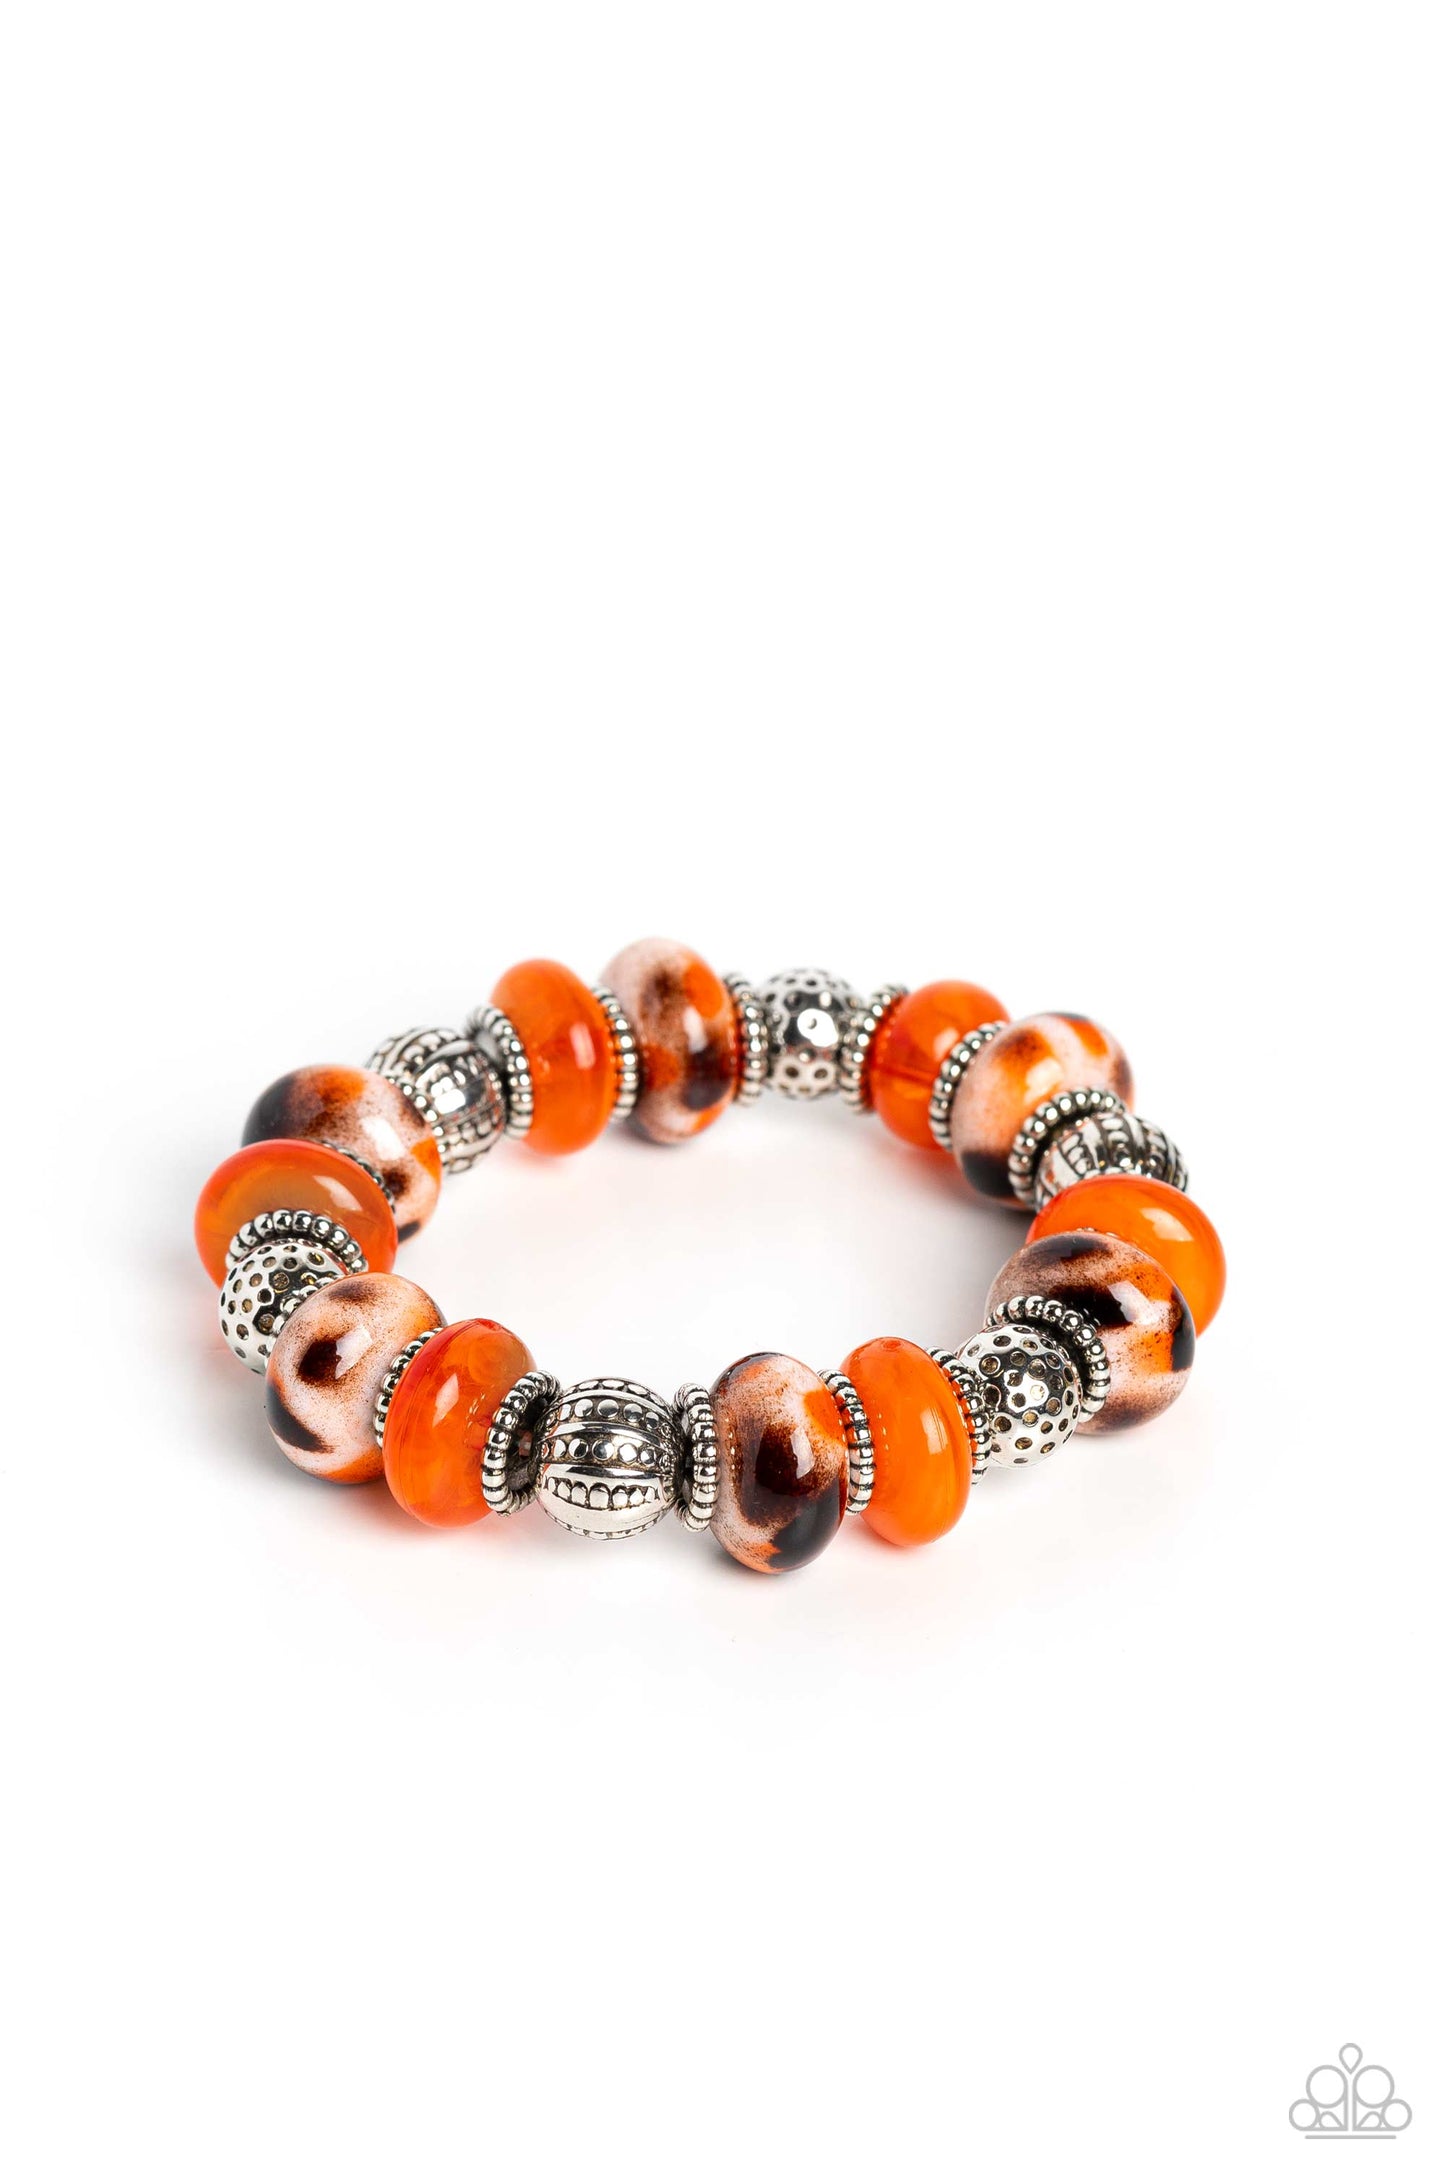 Warped Wayfarer - orange - Paparazzi bracelet